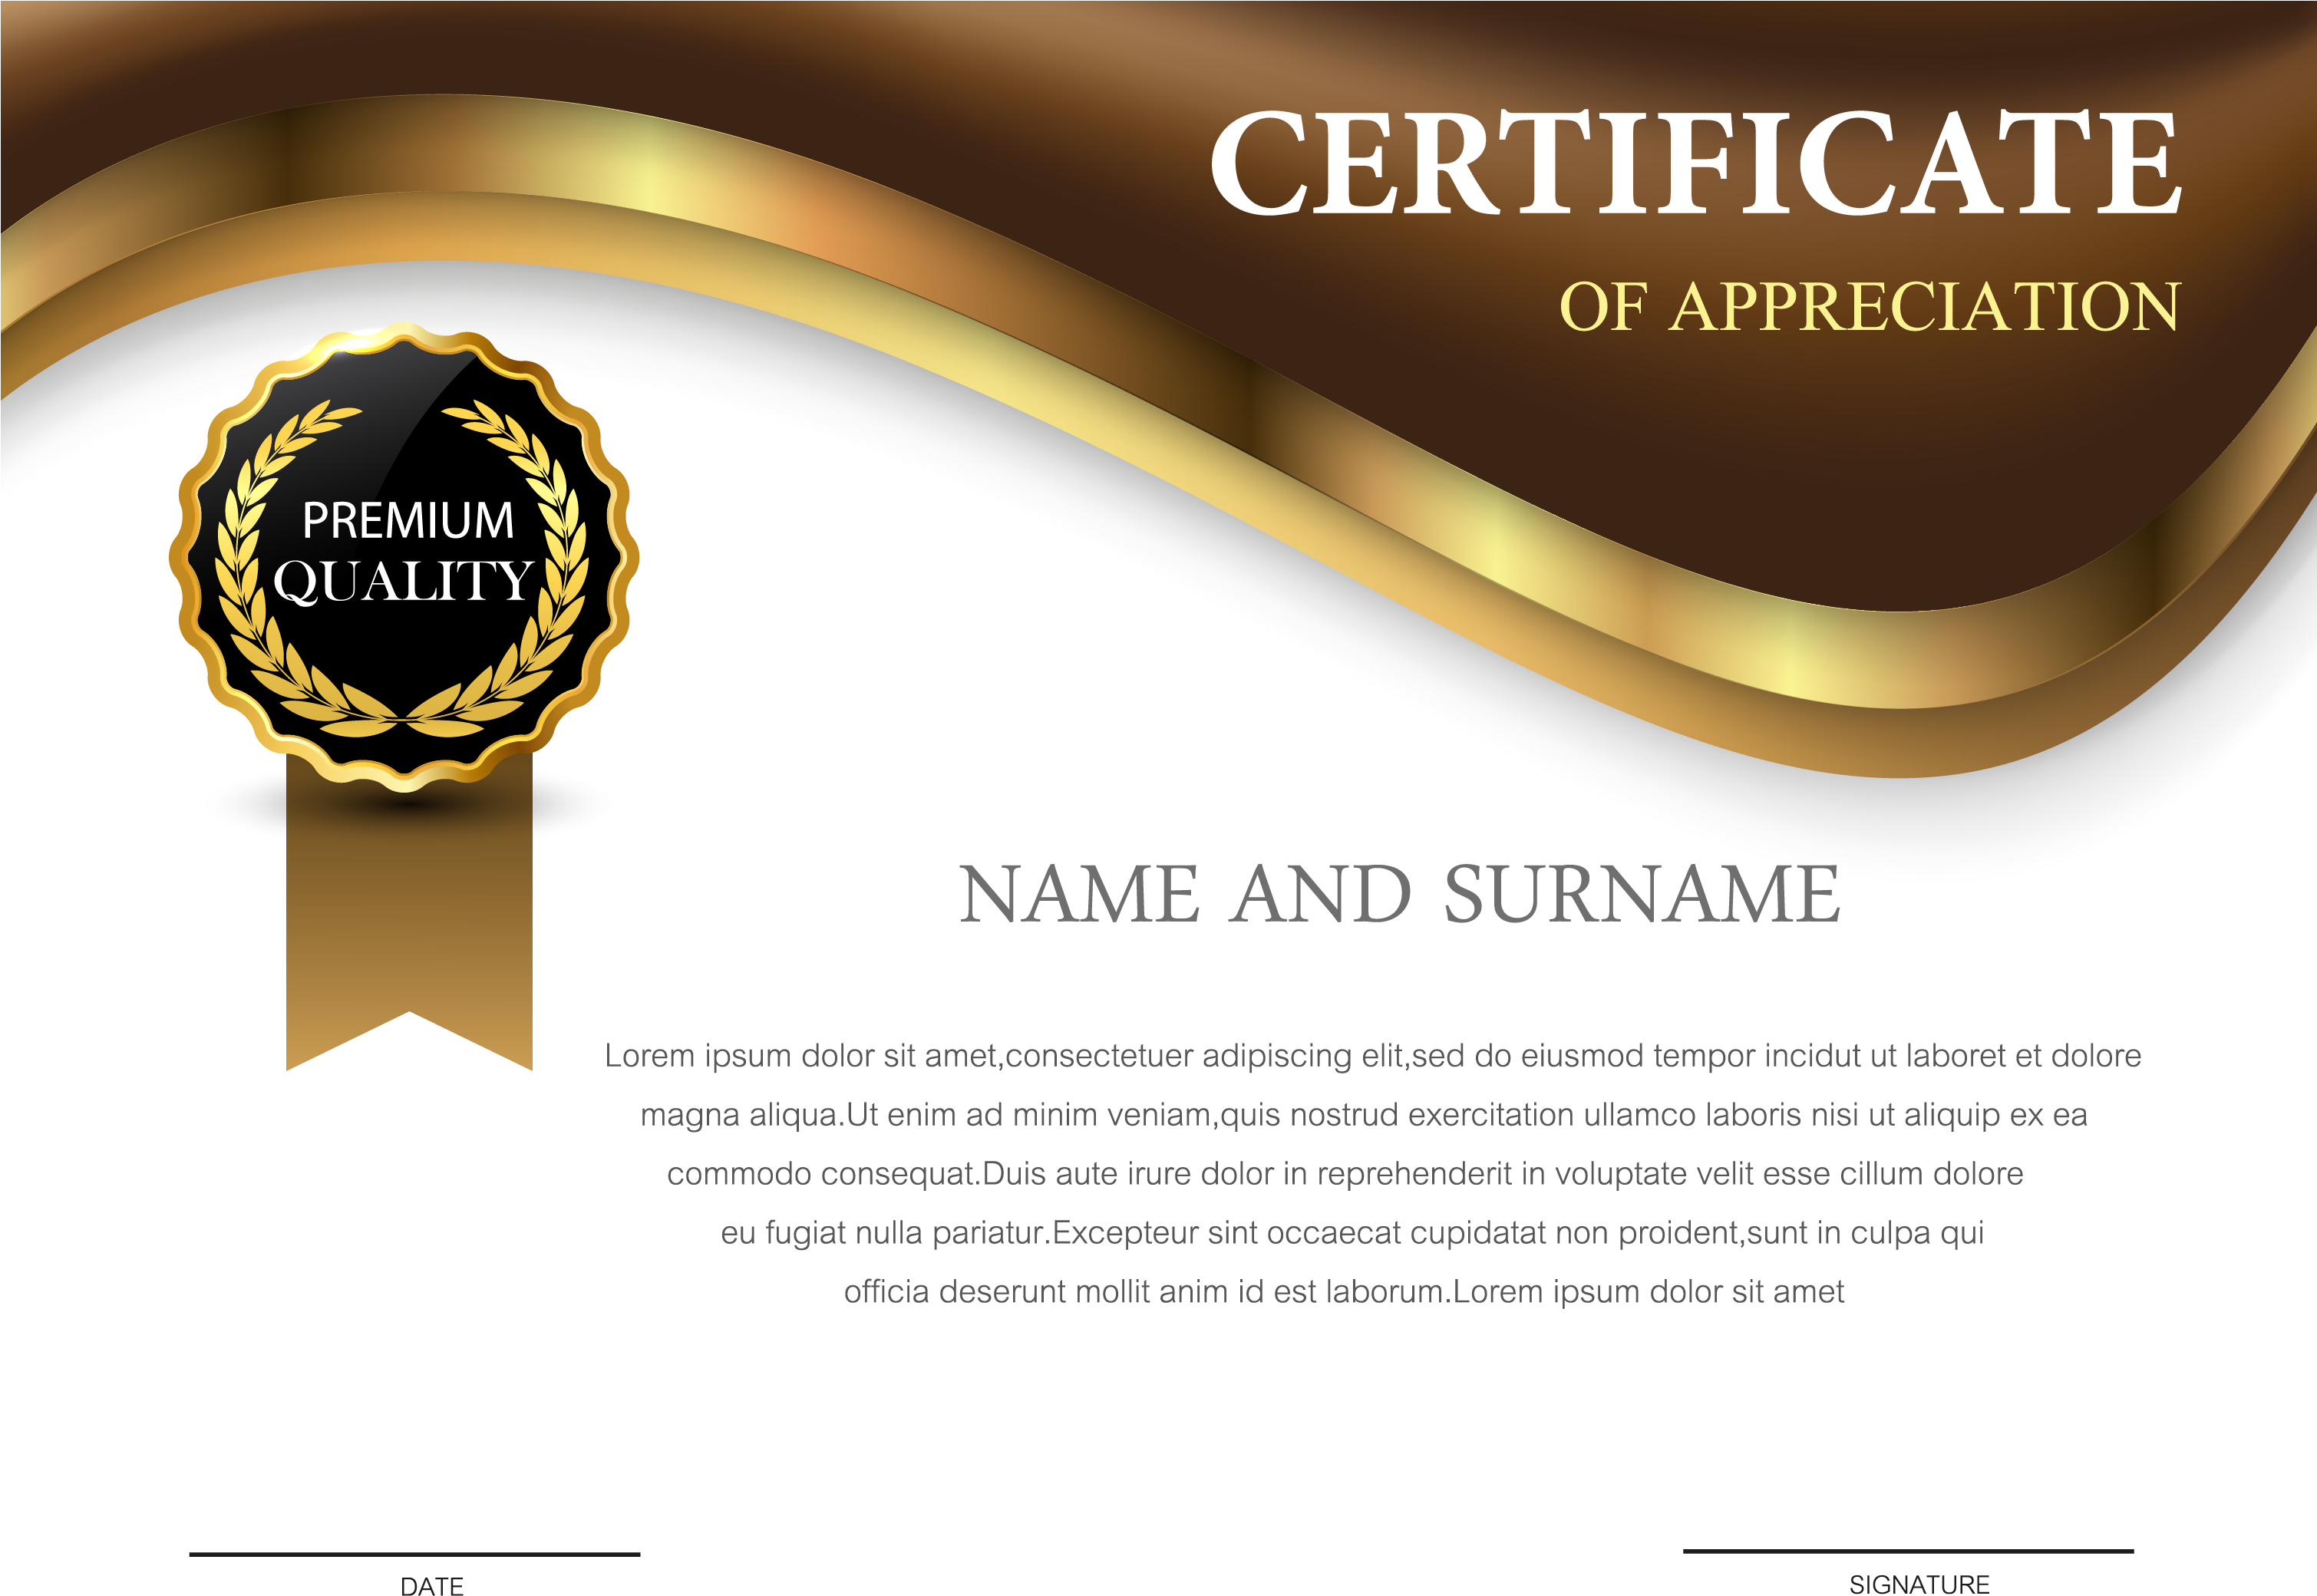 Appreciation Certificate PNG Download Image